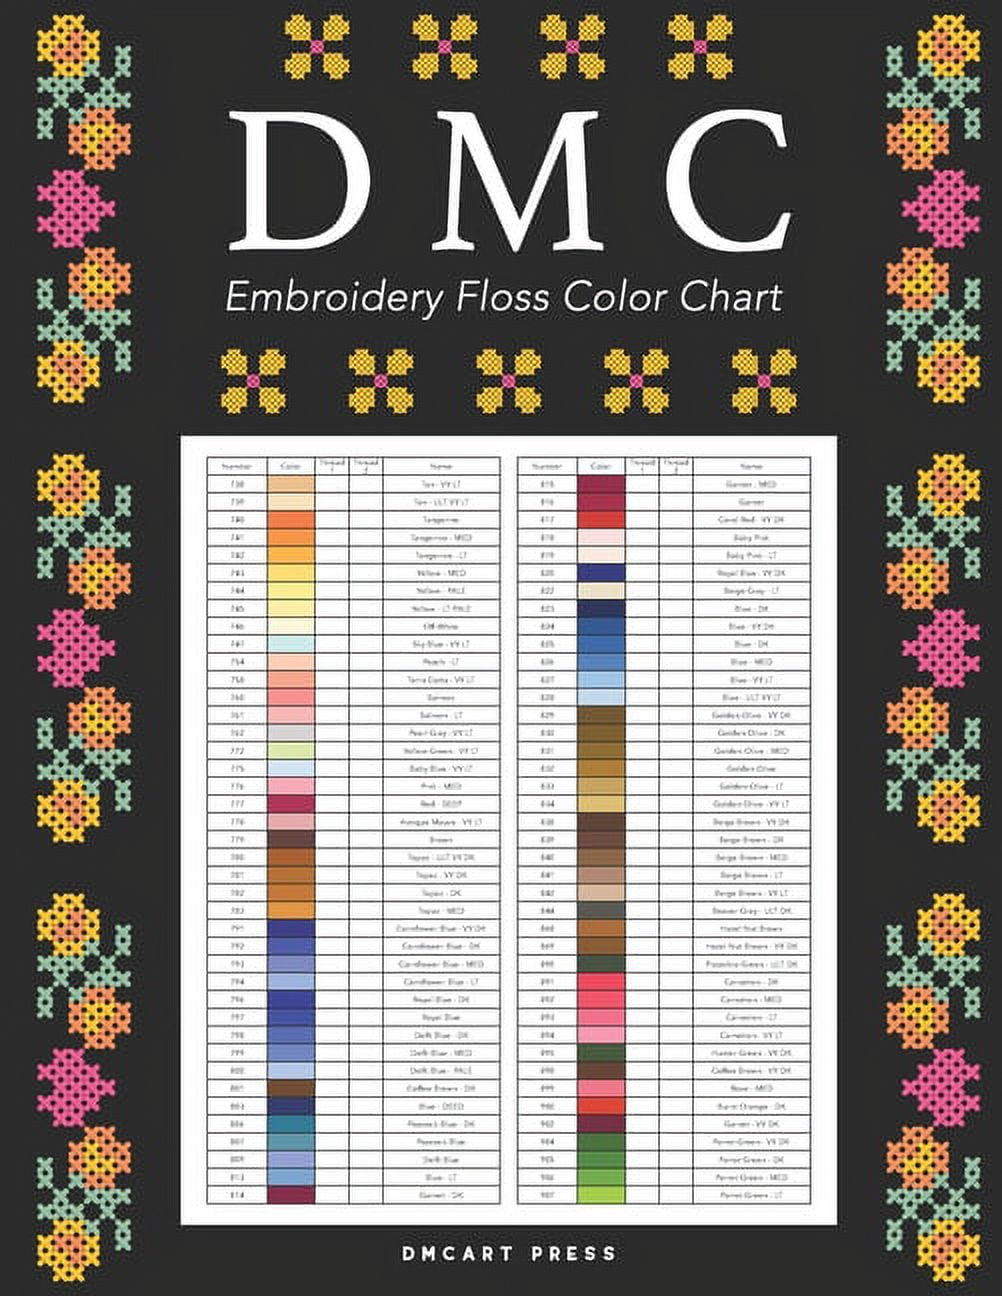 dmc color list - Google Search  Dmc floss chart, Cross stitch floss, Dmc  embroidery floss